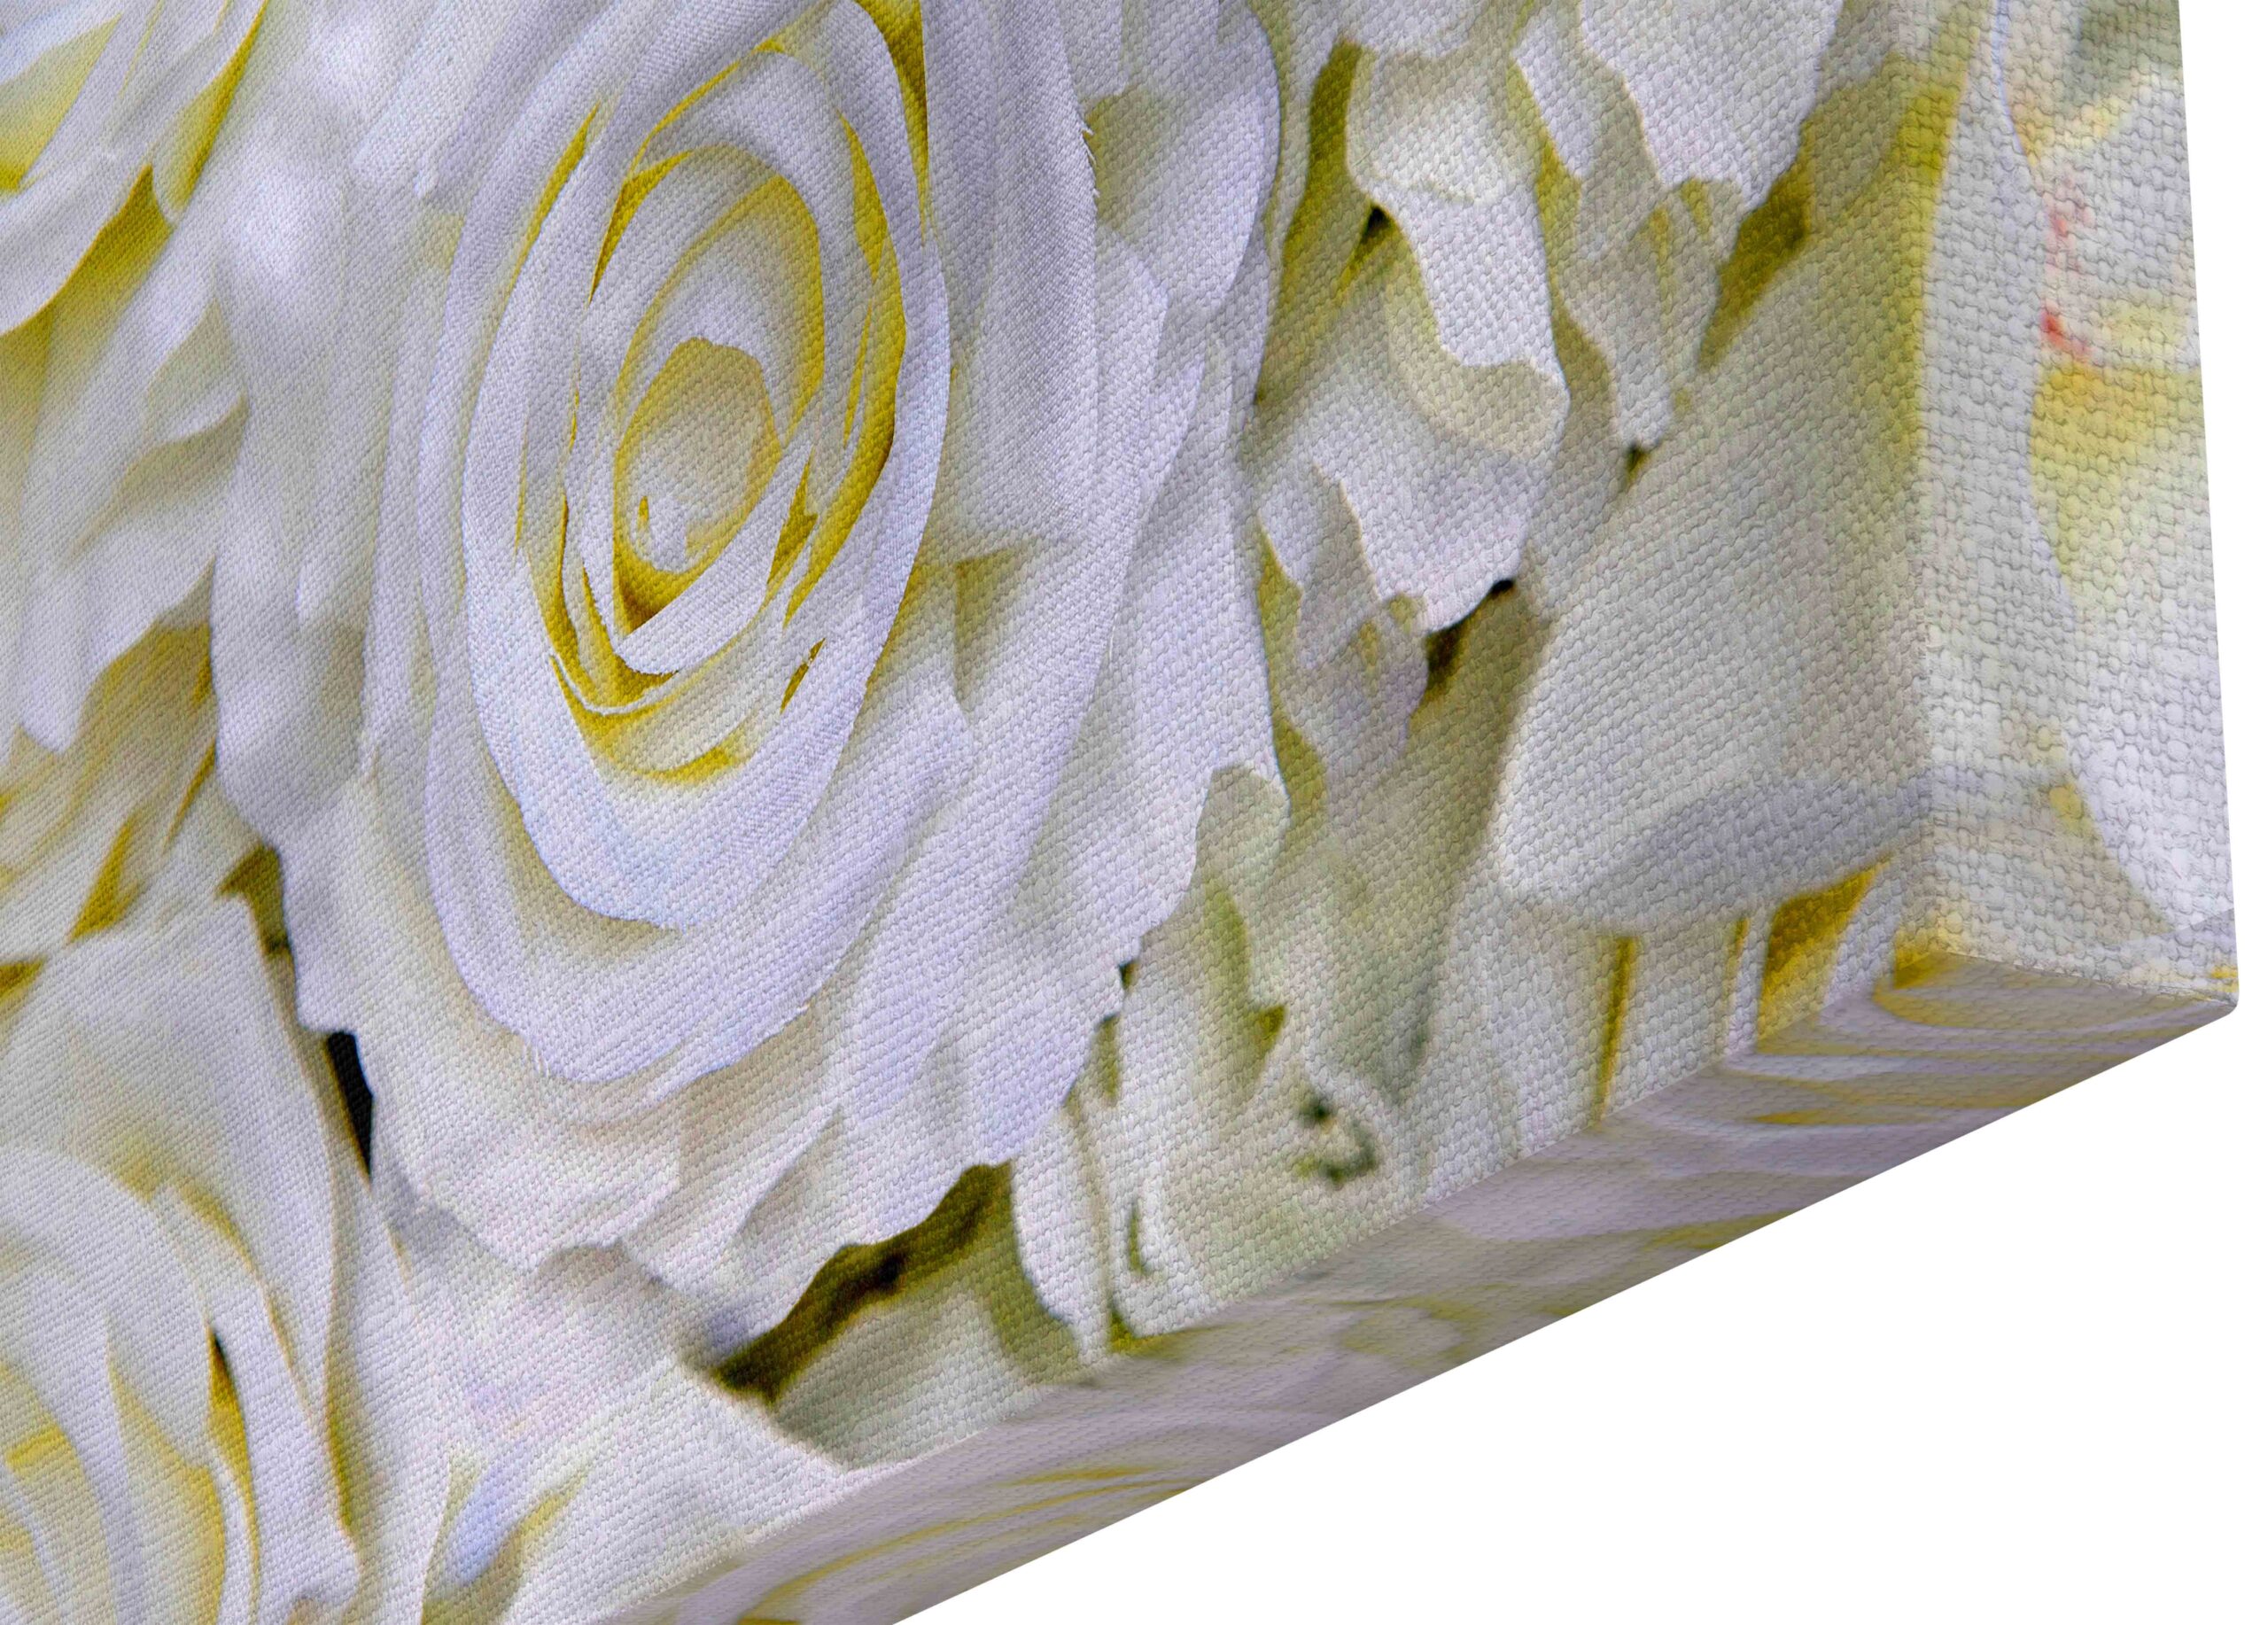 Canvas Print Decoration white roses flower